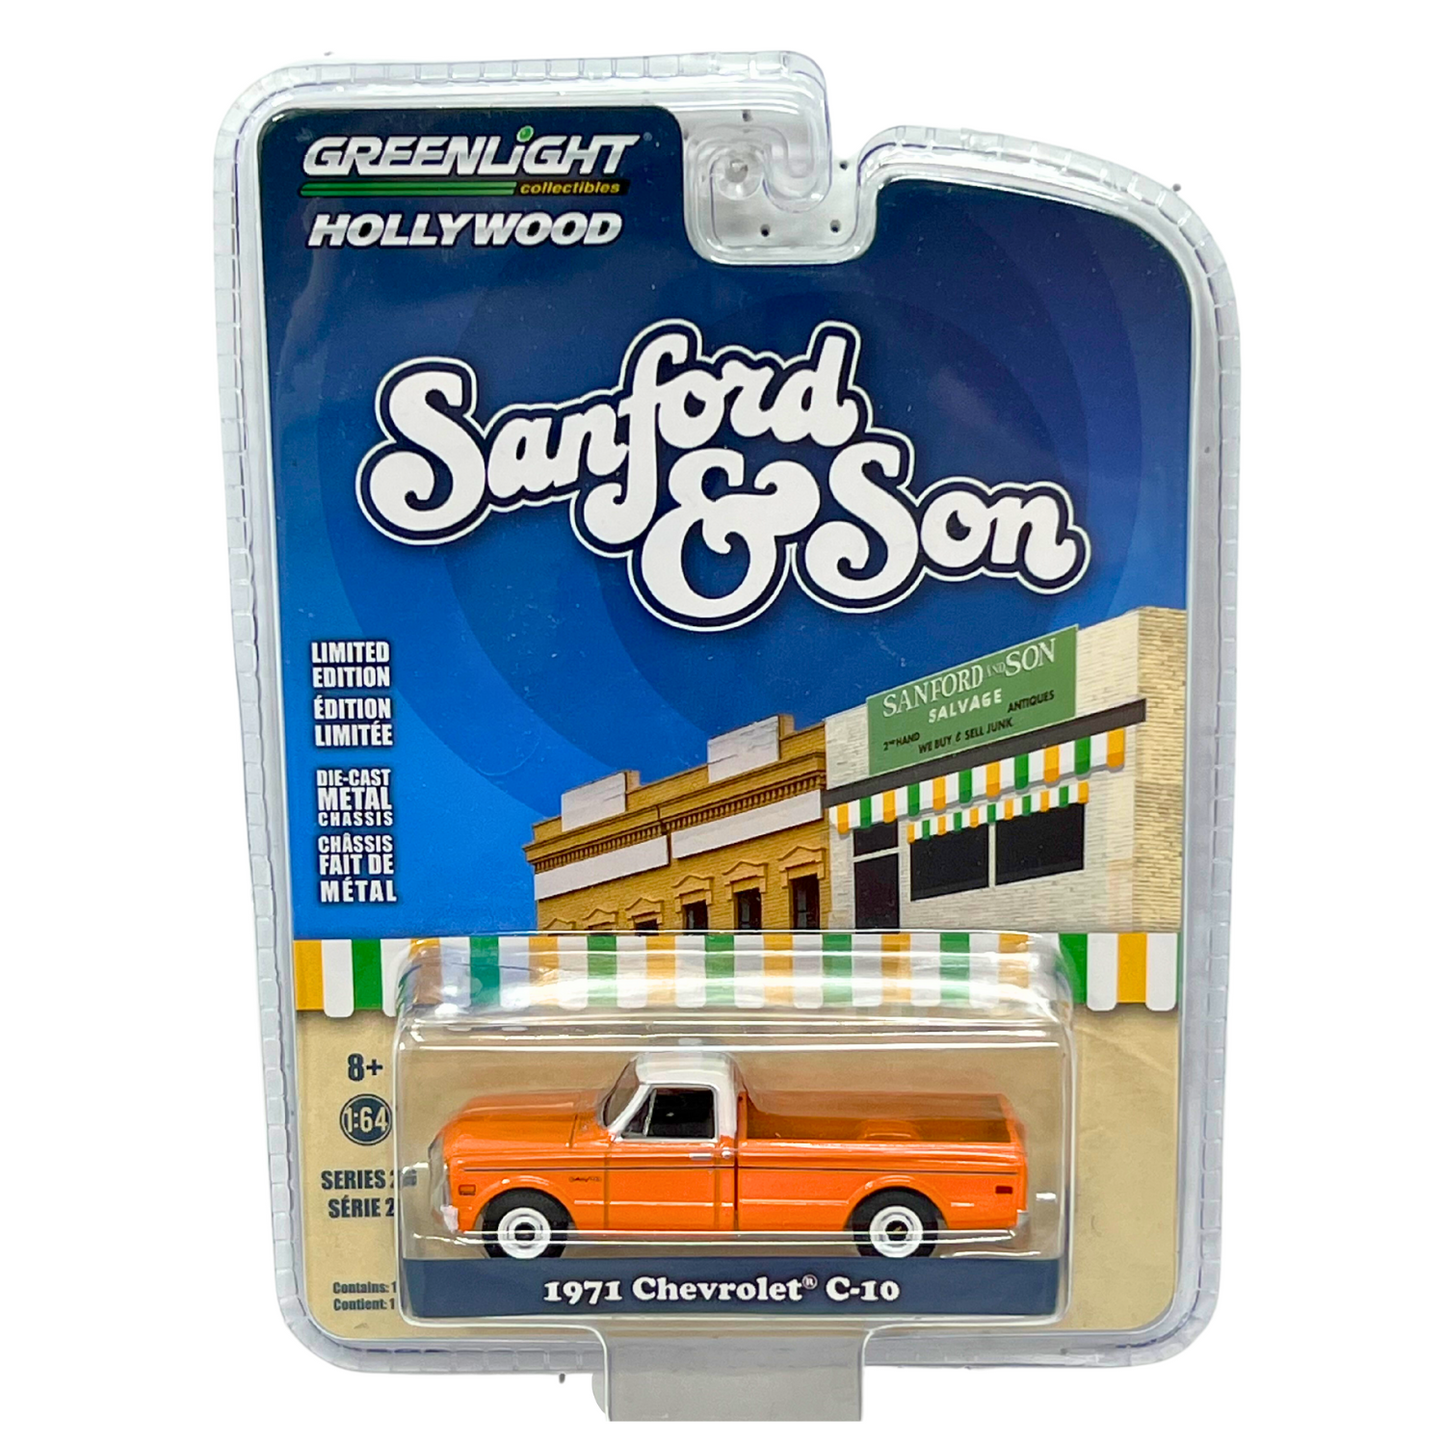 Greenlight Hollywood Sanford & Son 1971 Chevrolet C-10 GTX 1:64 Diecast